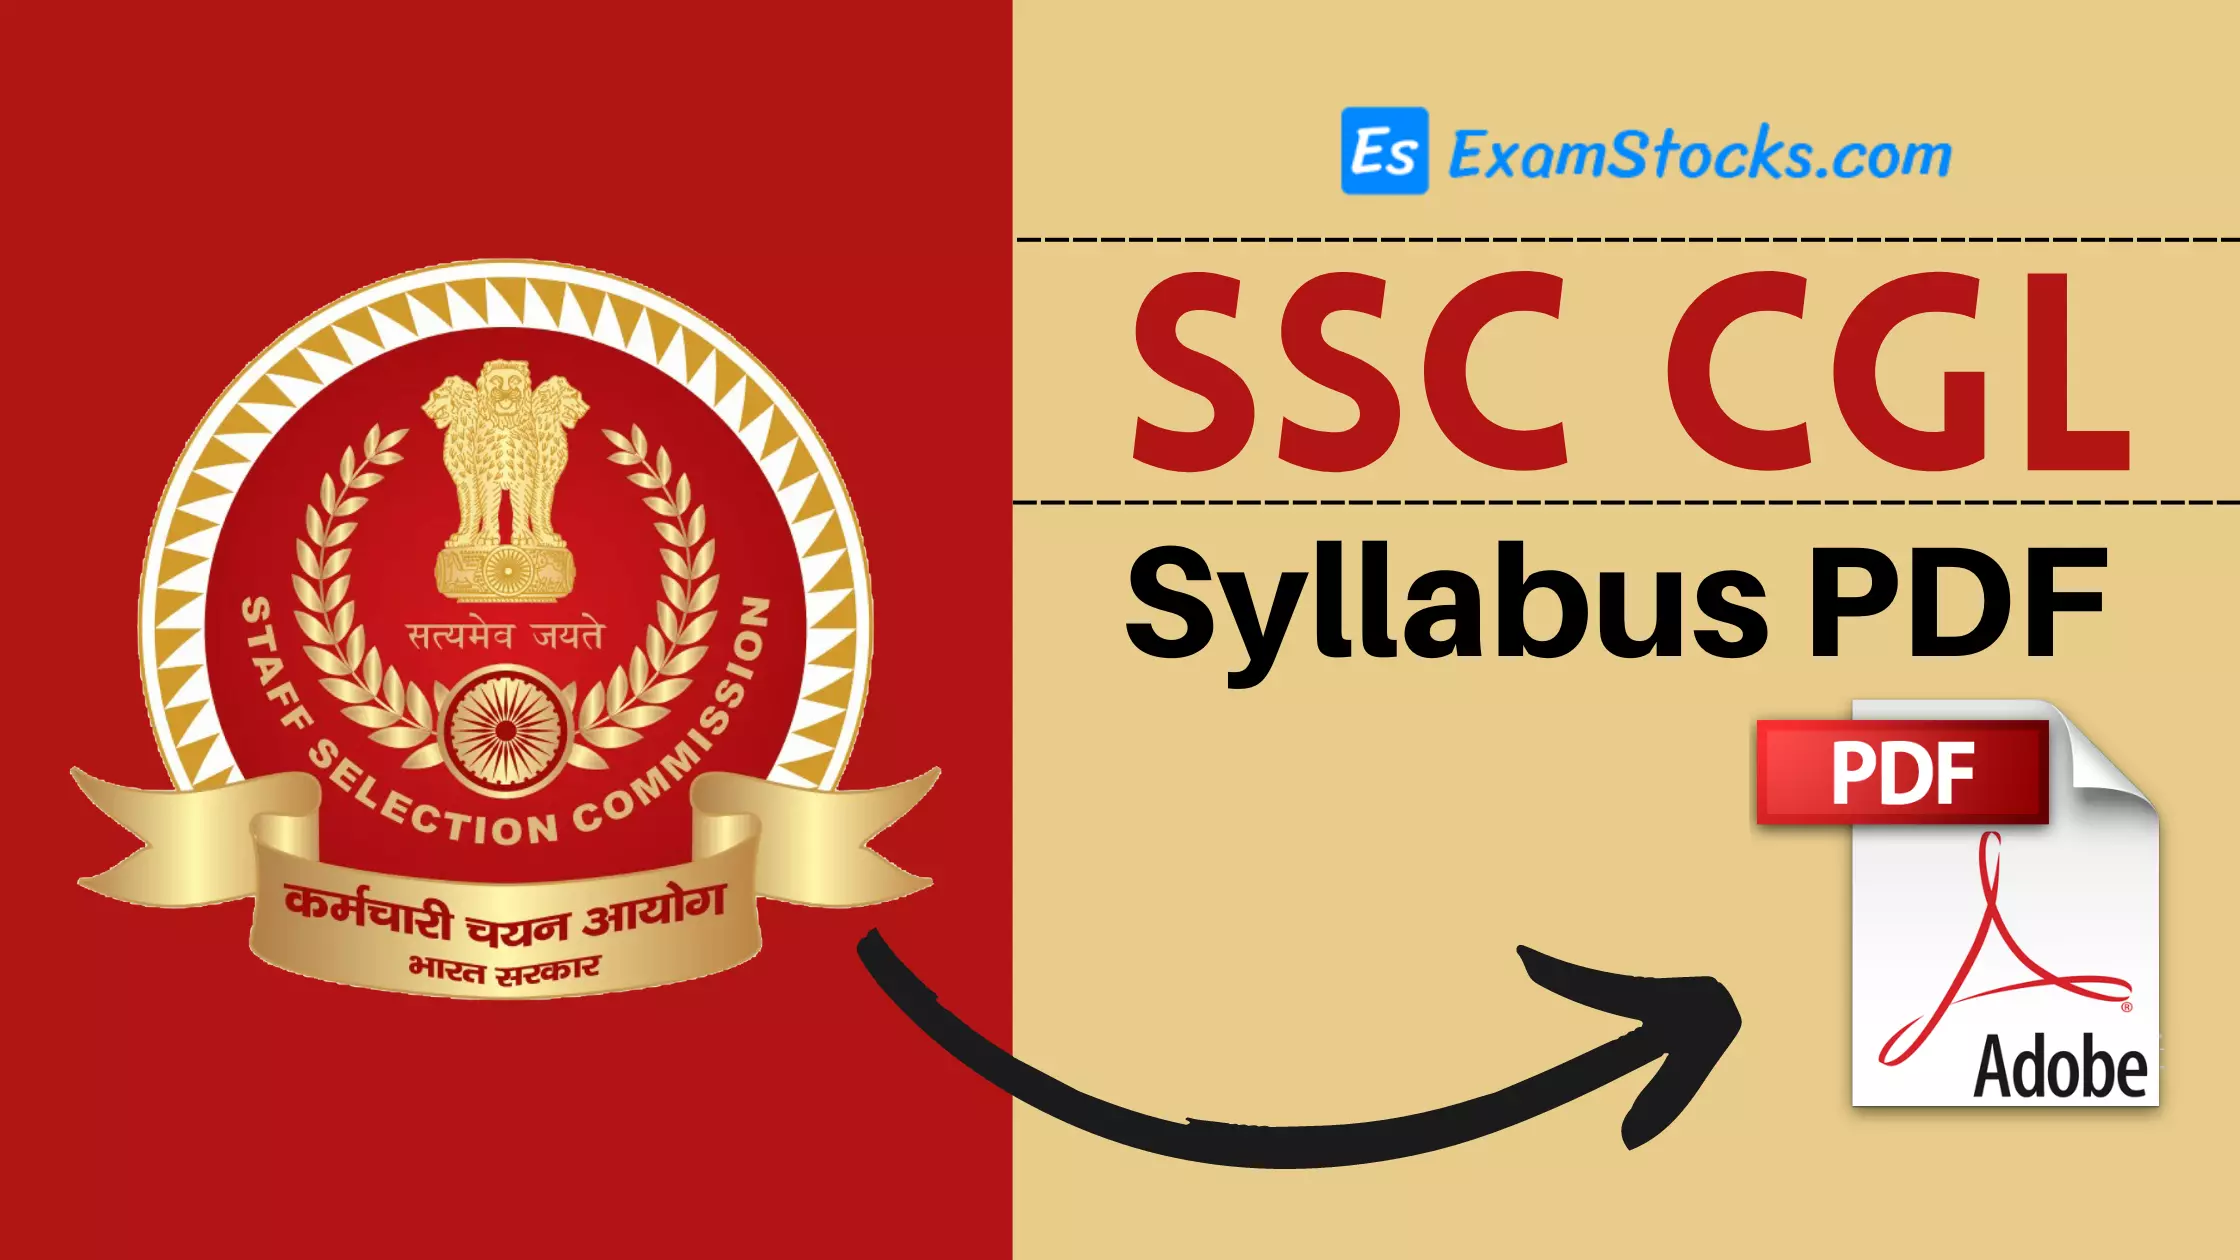 SSC CGL Syllabus PDF